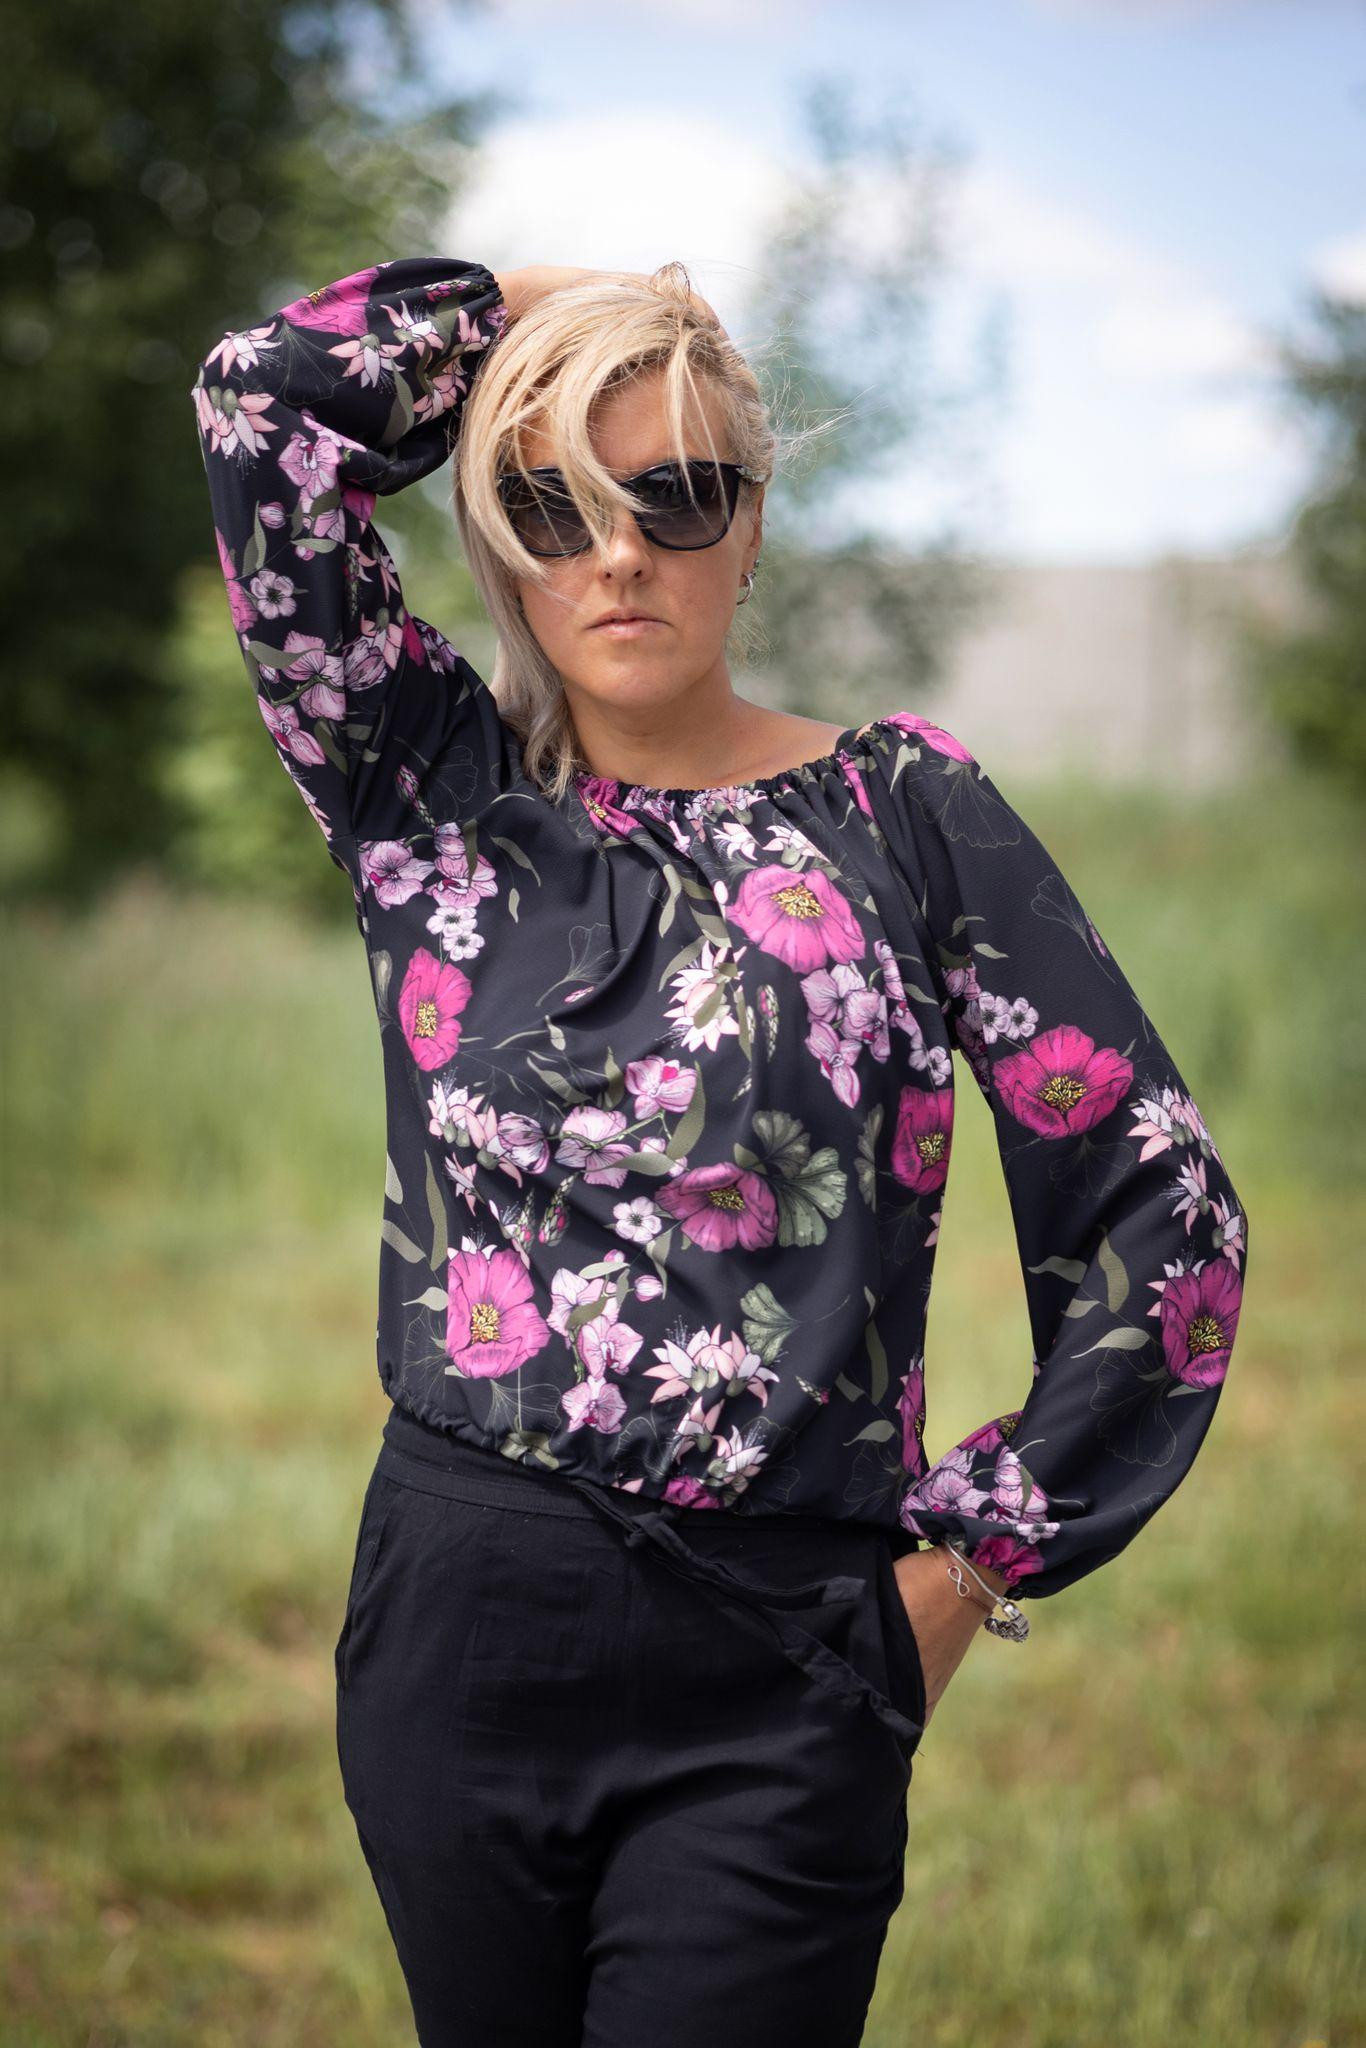 Bardot neckline blouse (SOFIA) - RETRO FLOWERS pat. 4 - sewing set